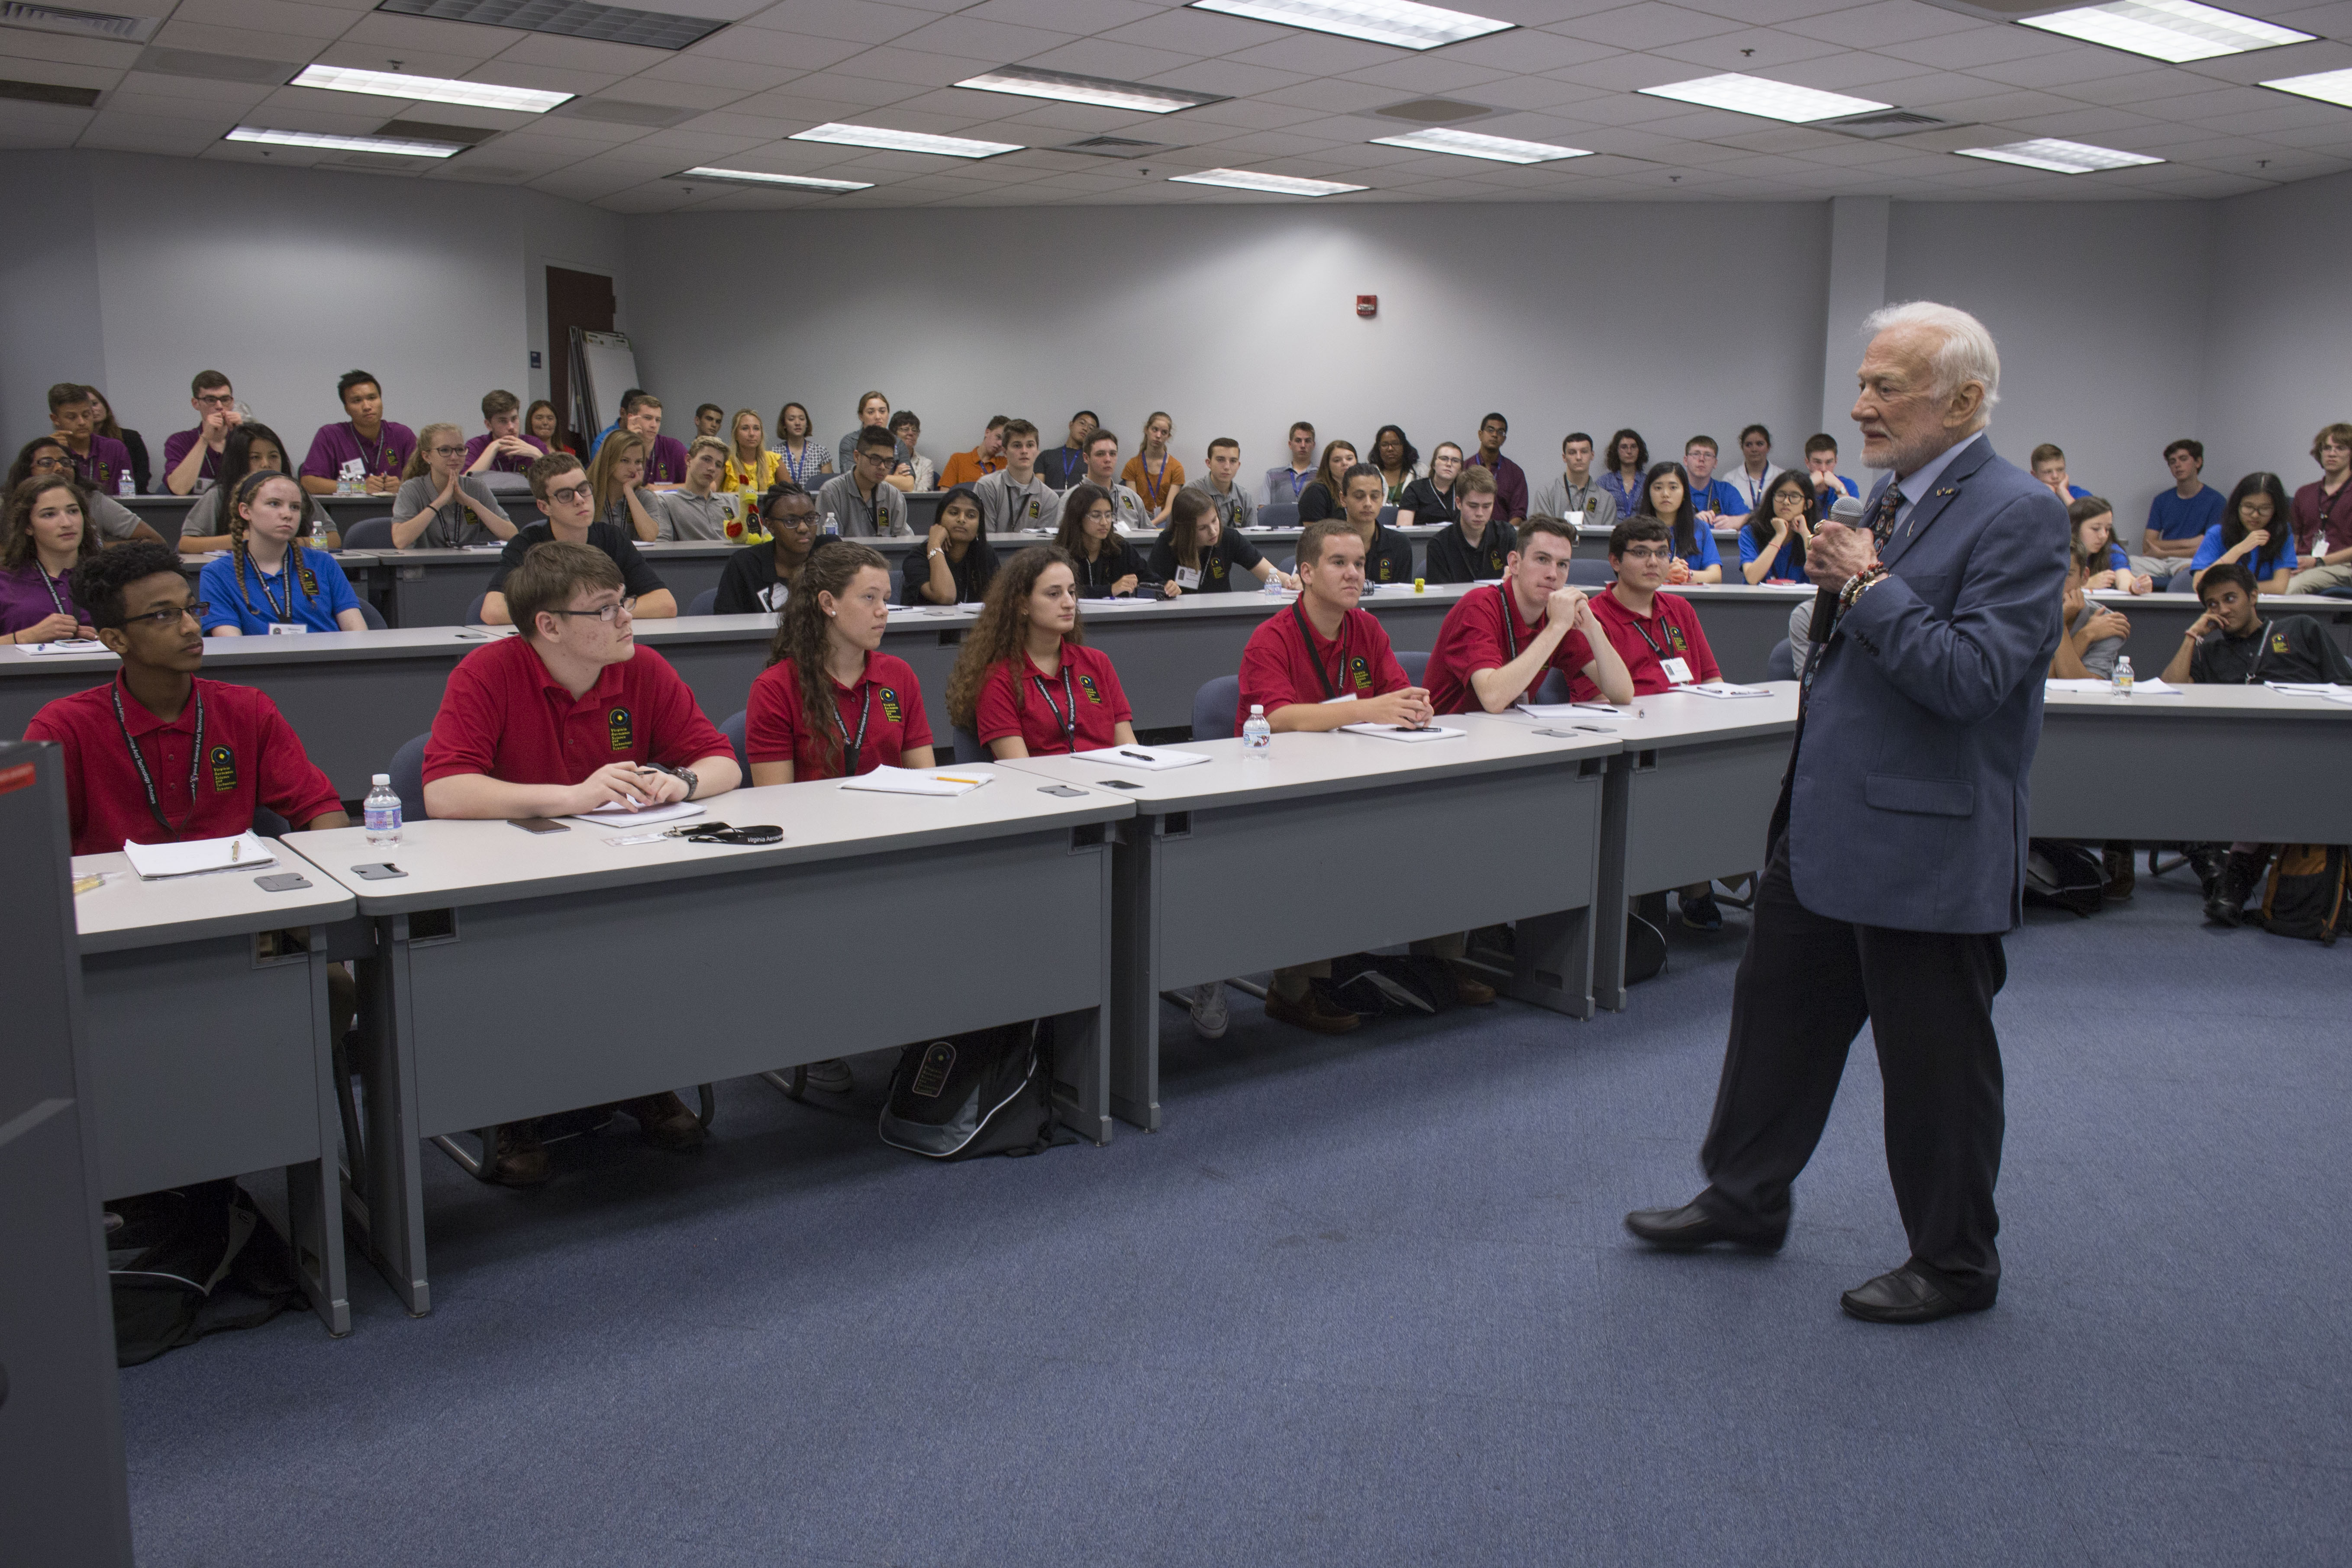 Buzz Aldrin speaks at the ODU Peninsula Center 